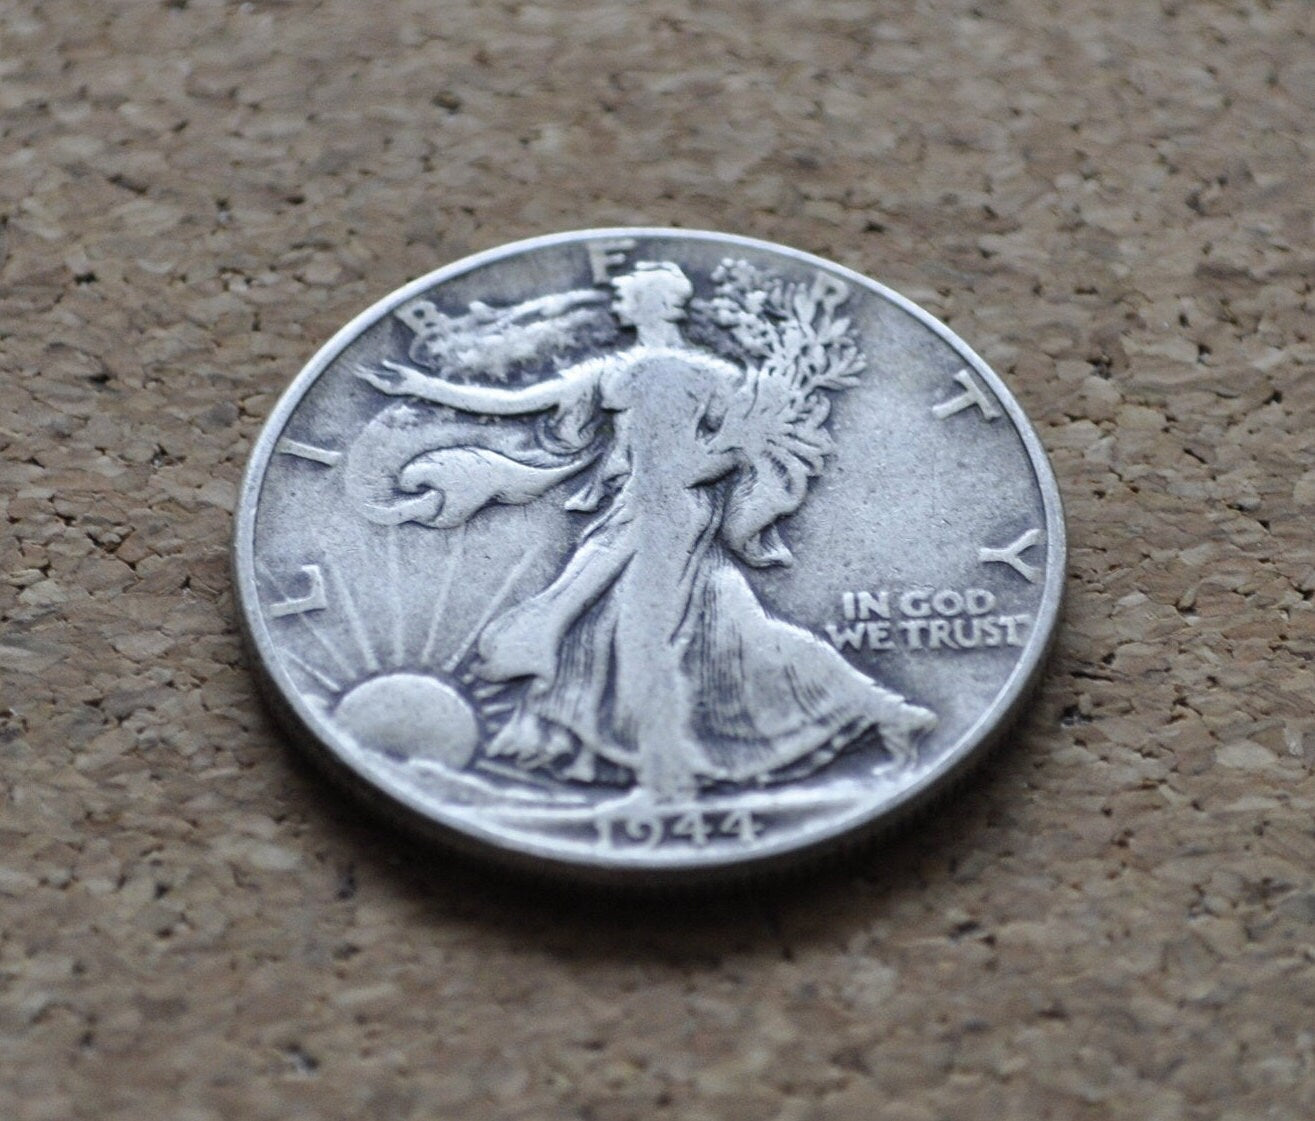 1944 Walking Liberty Half Dollar - Average Circulation - Philadelphia Mint - WWII Era Coin - Silver Half Dollar - 1944-P Half Dollar